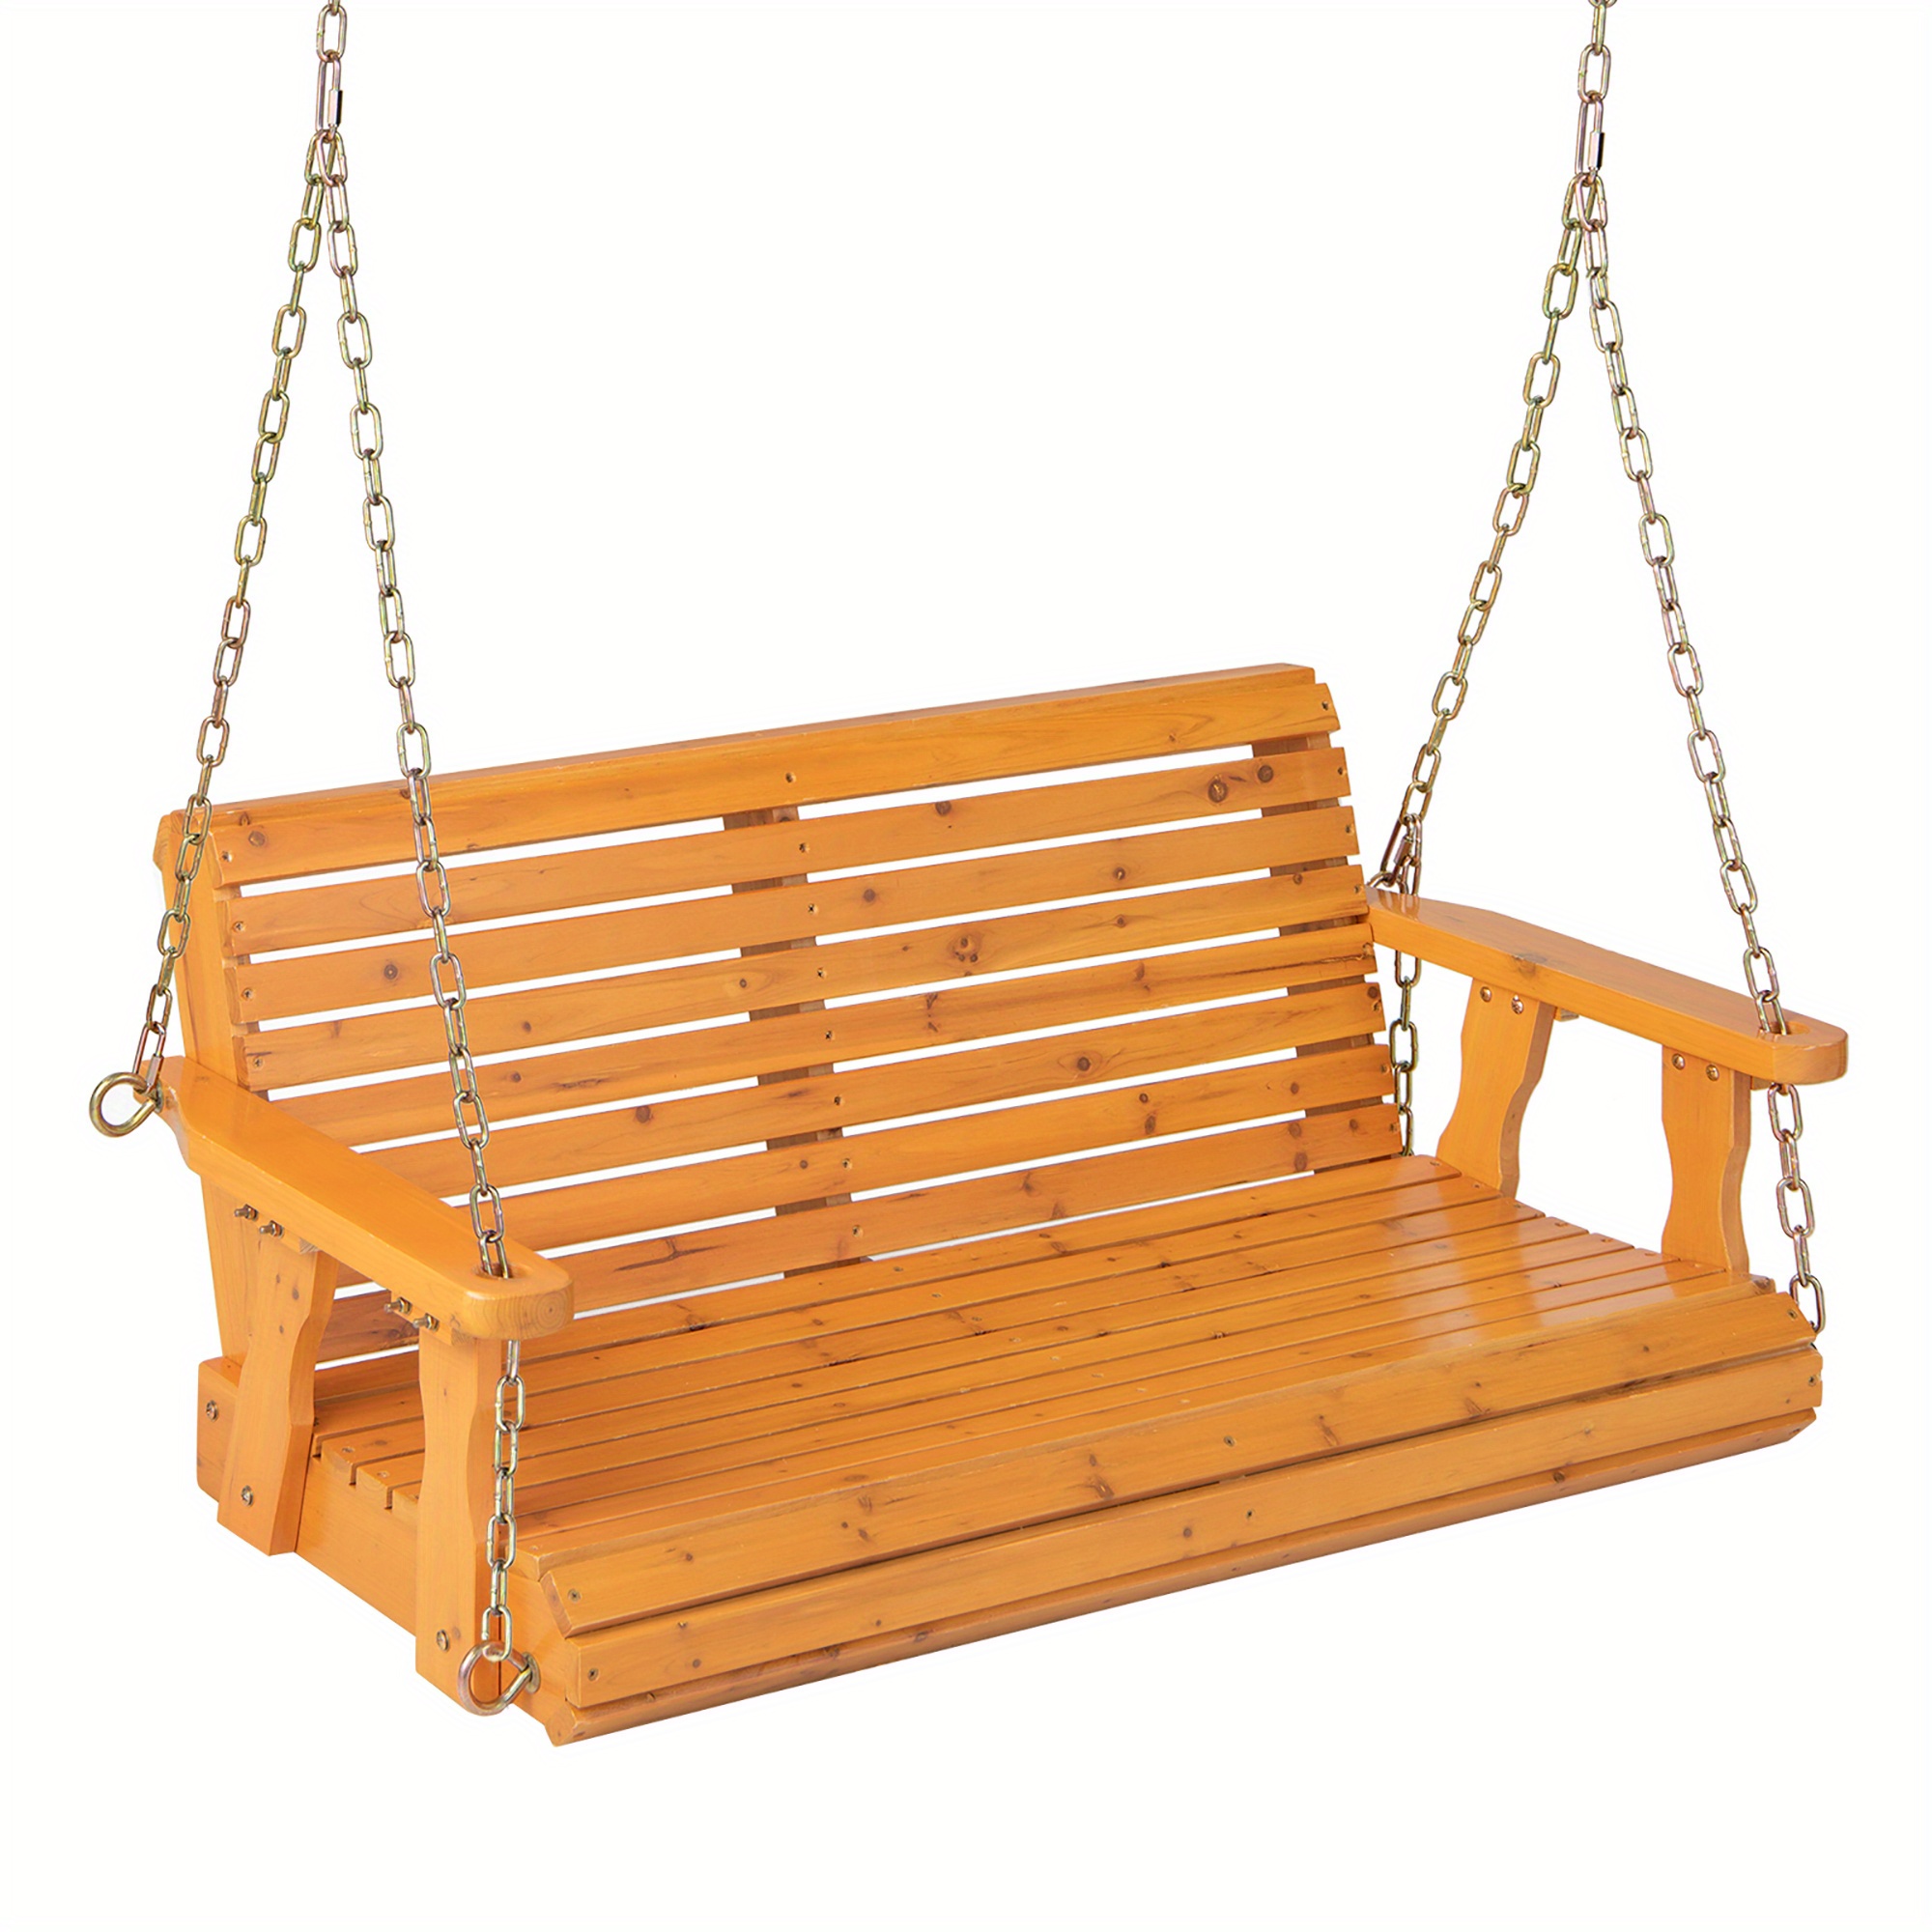 

Gymax 2-person Porch Swing Chair Wooden Garden Swing Bench W/ Adjustable Chains Orange